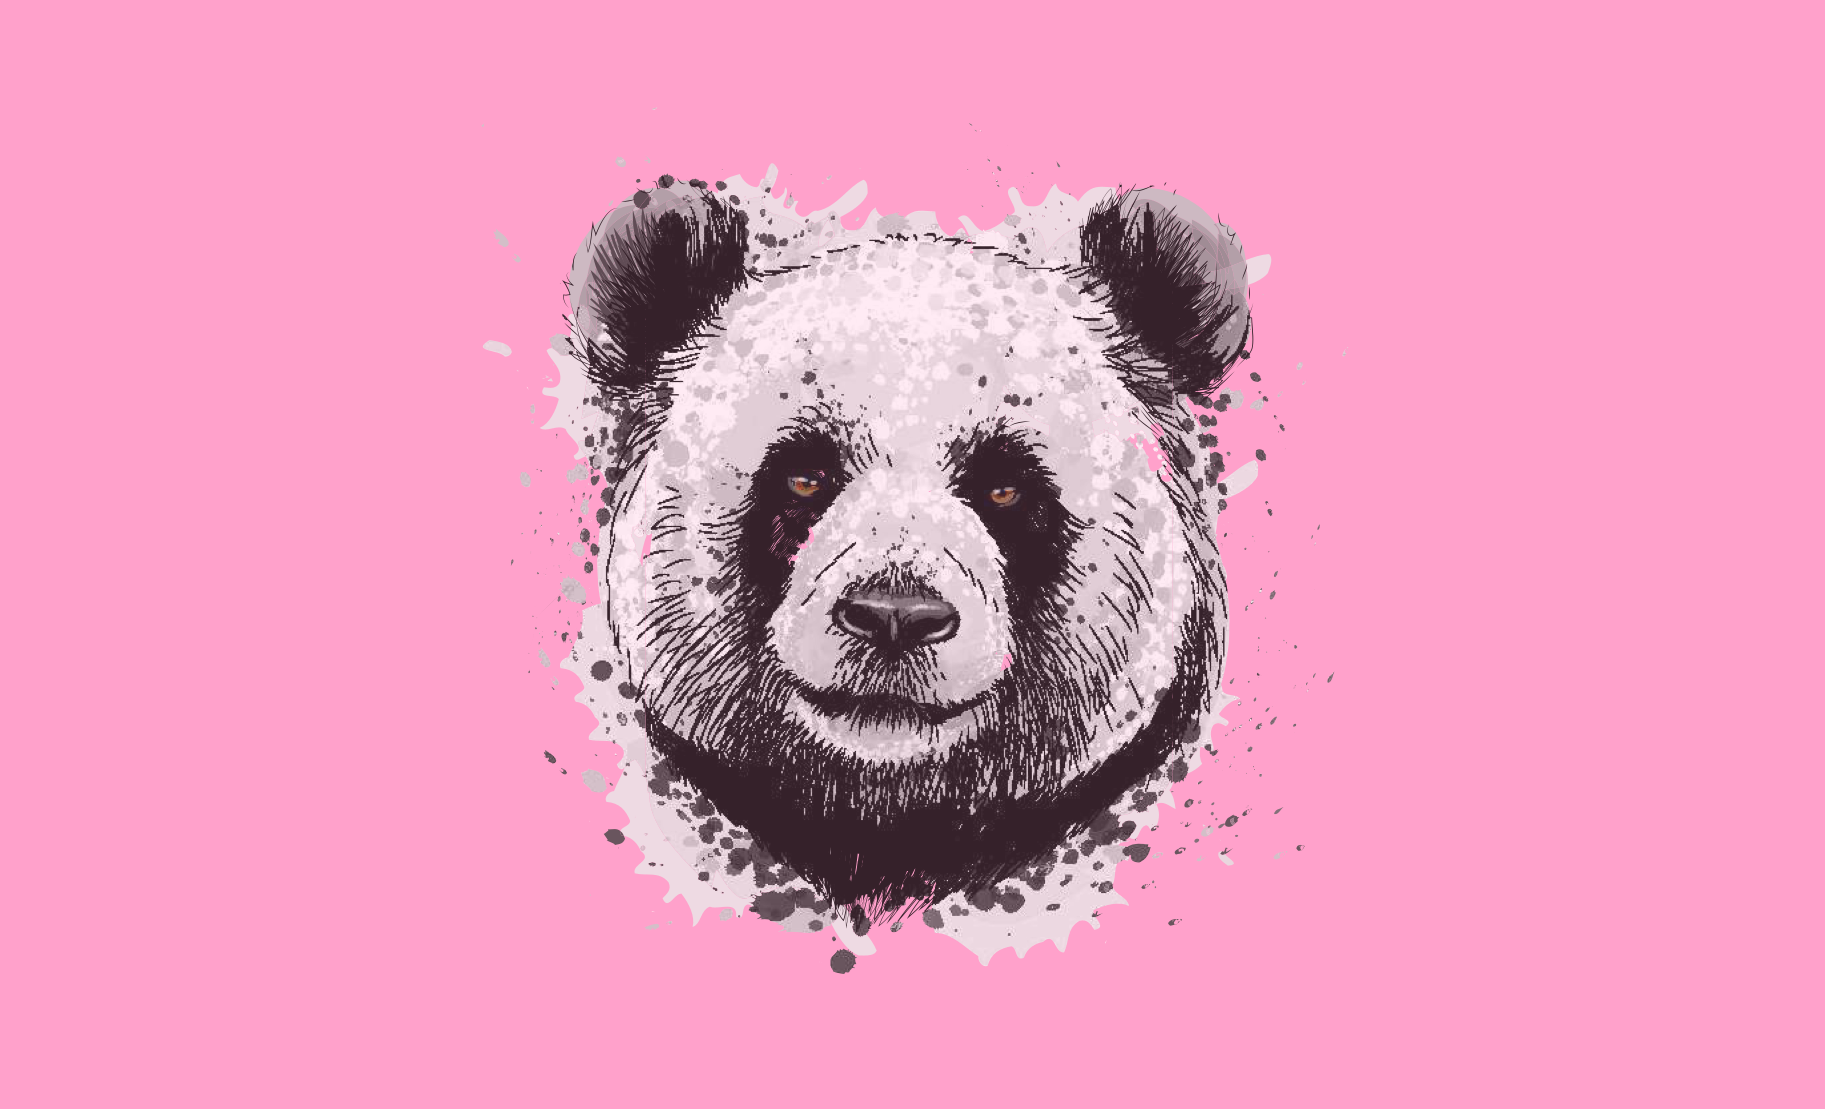 Detailed sketch of a panda head.